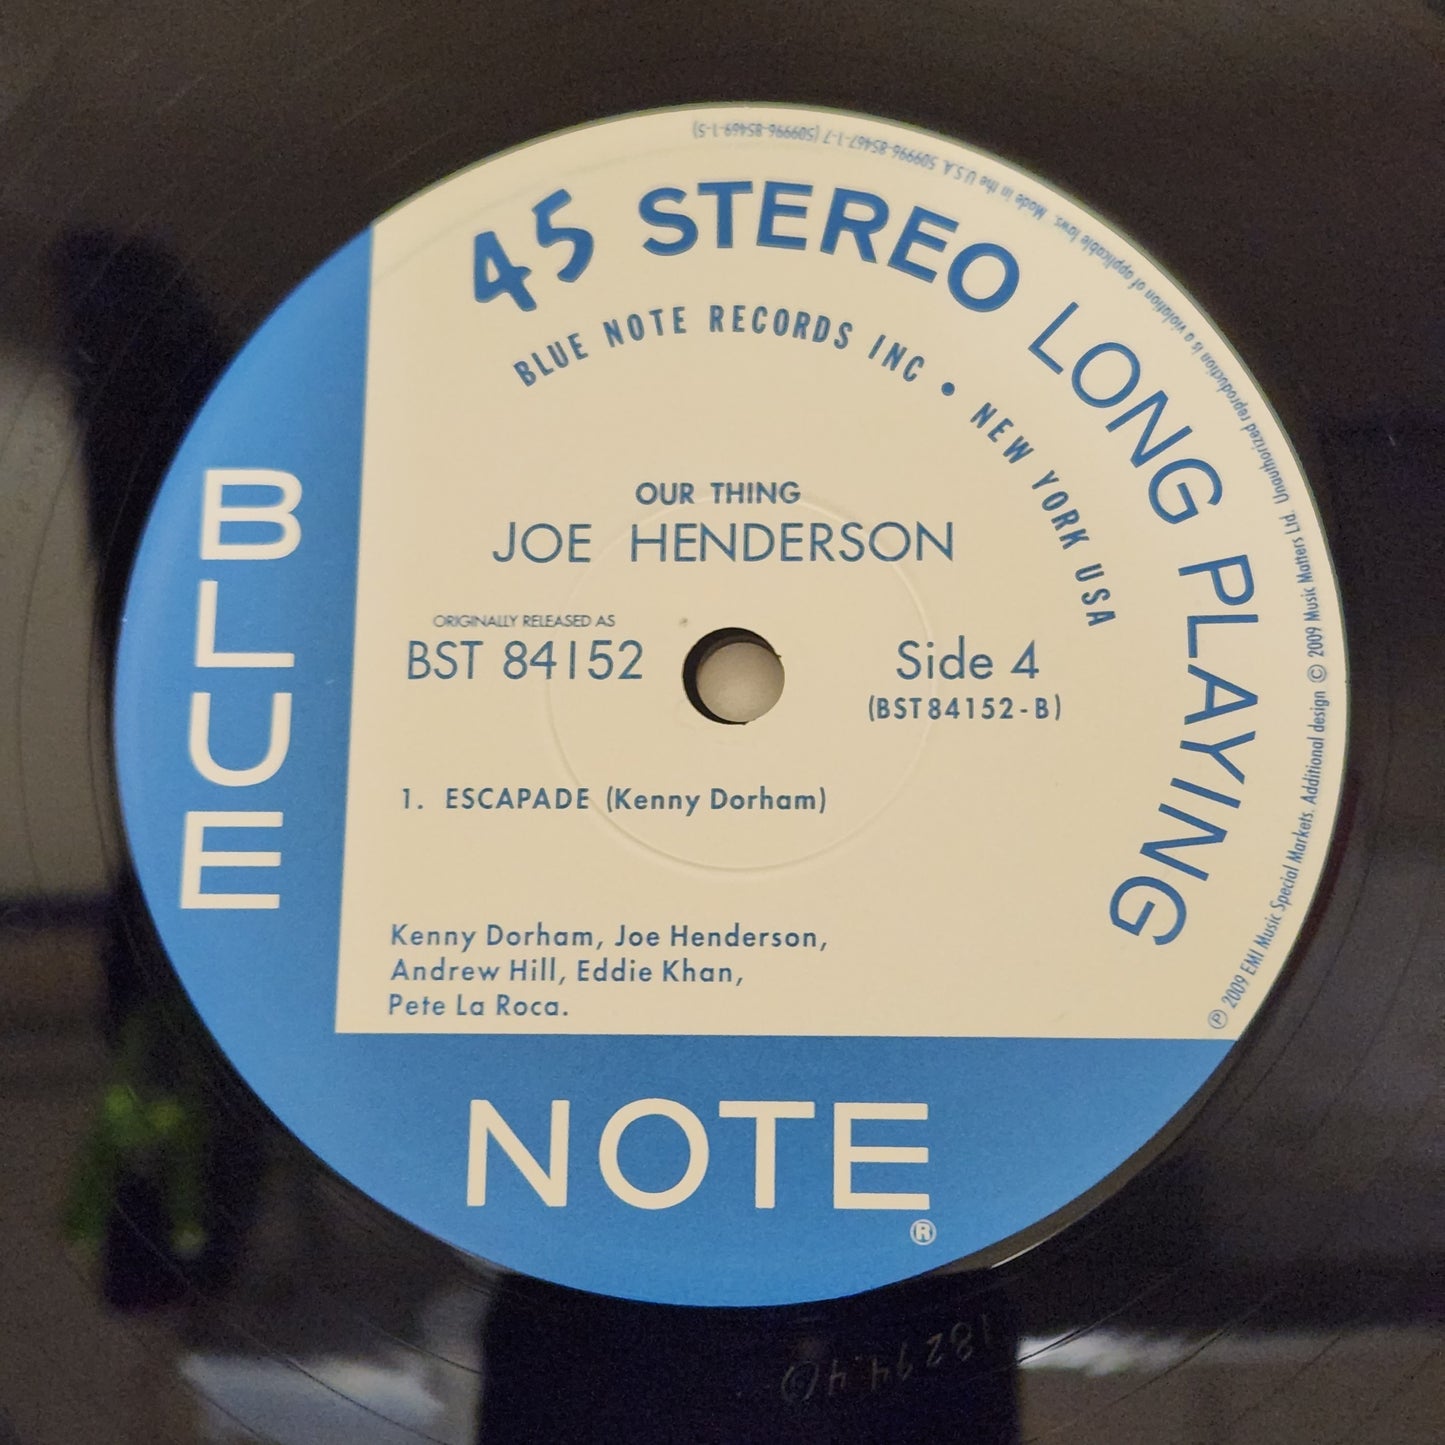 Joe Henderson "Our Thing" Jazz Music Matters Blue Note 2009 Reissue 2LP 45 RPM Album